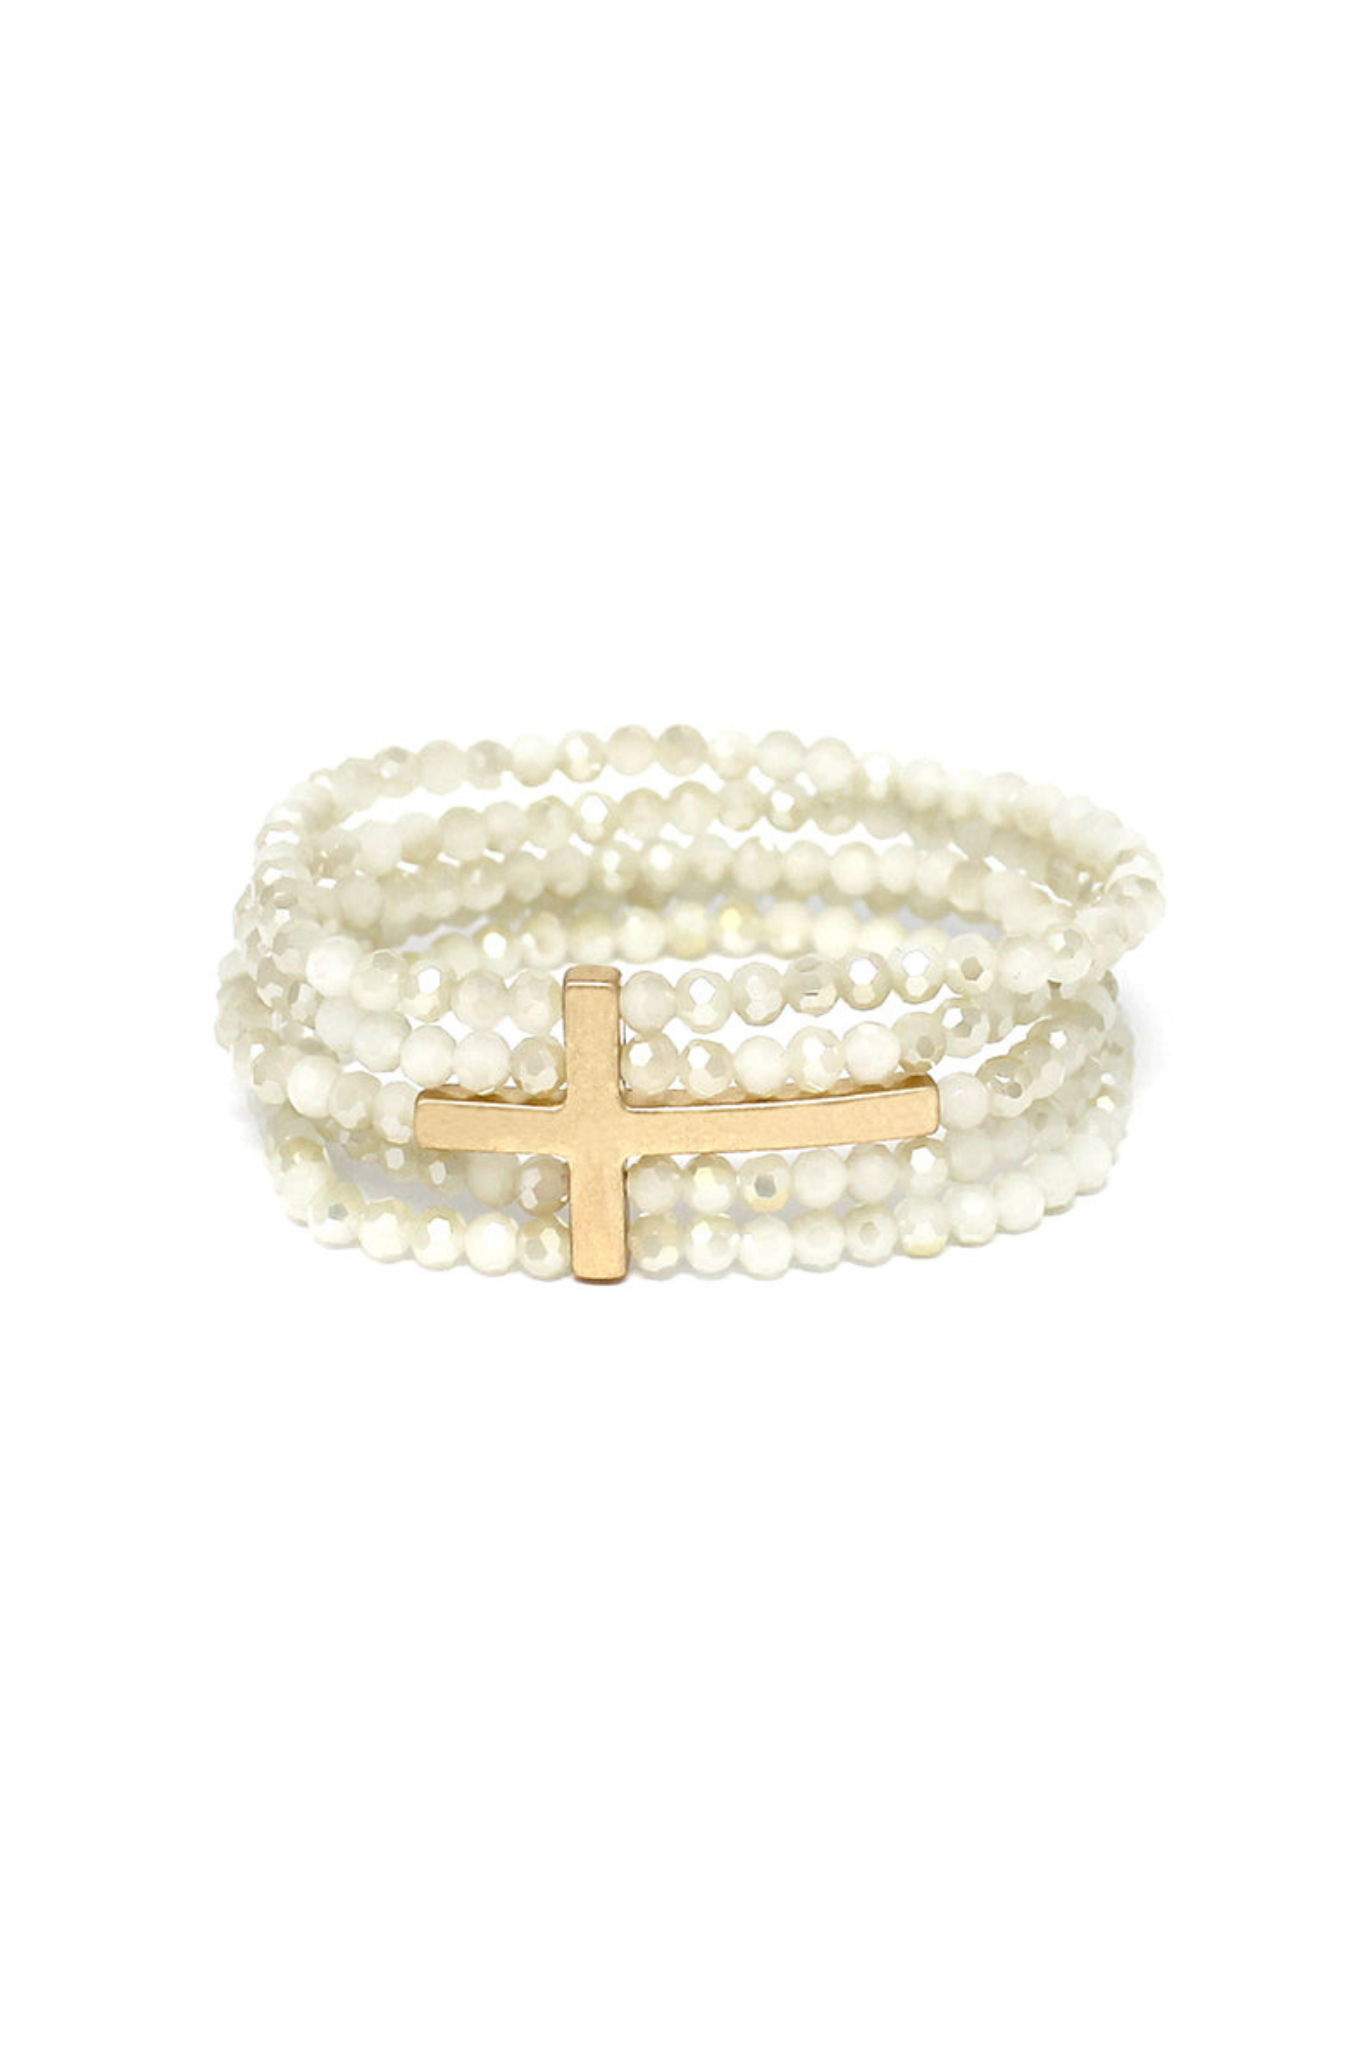 Gold Cross & Champagne Crystal Bracelet